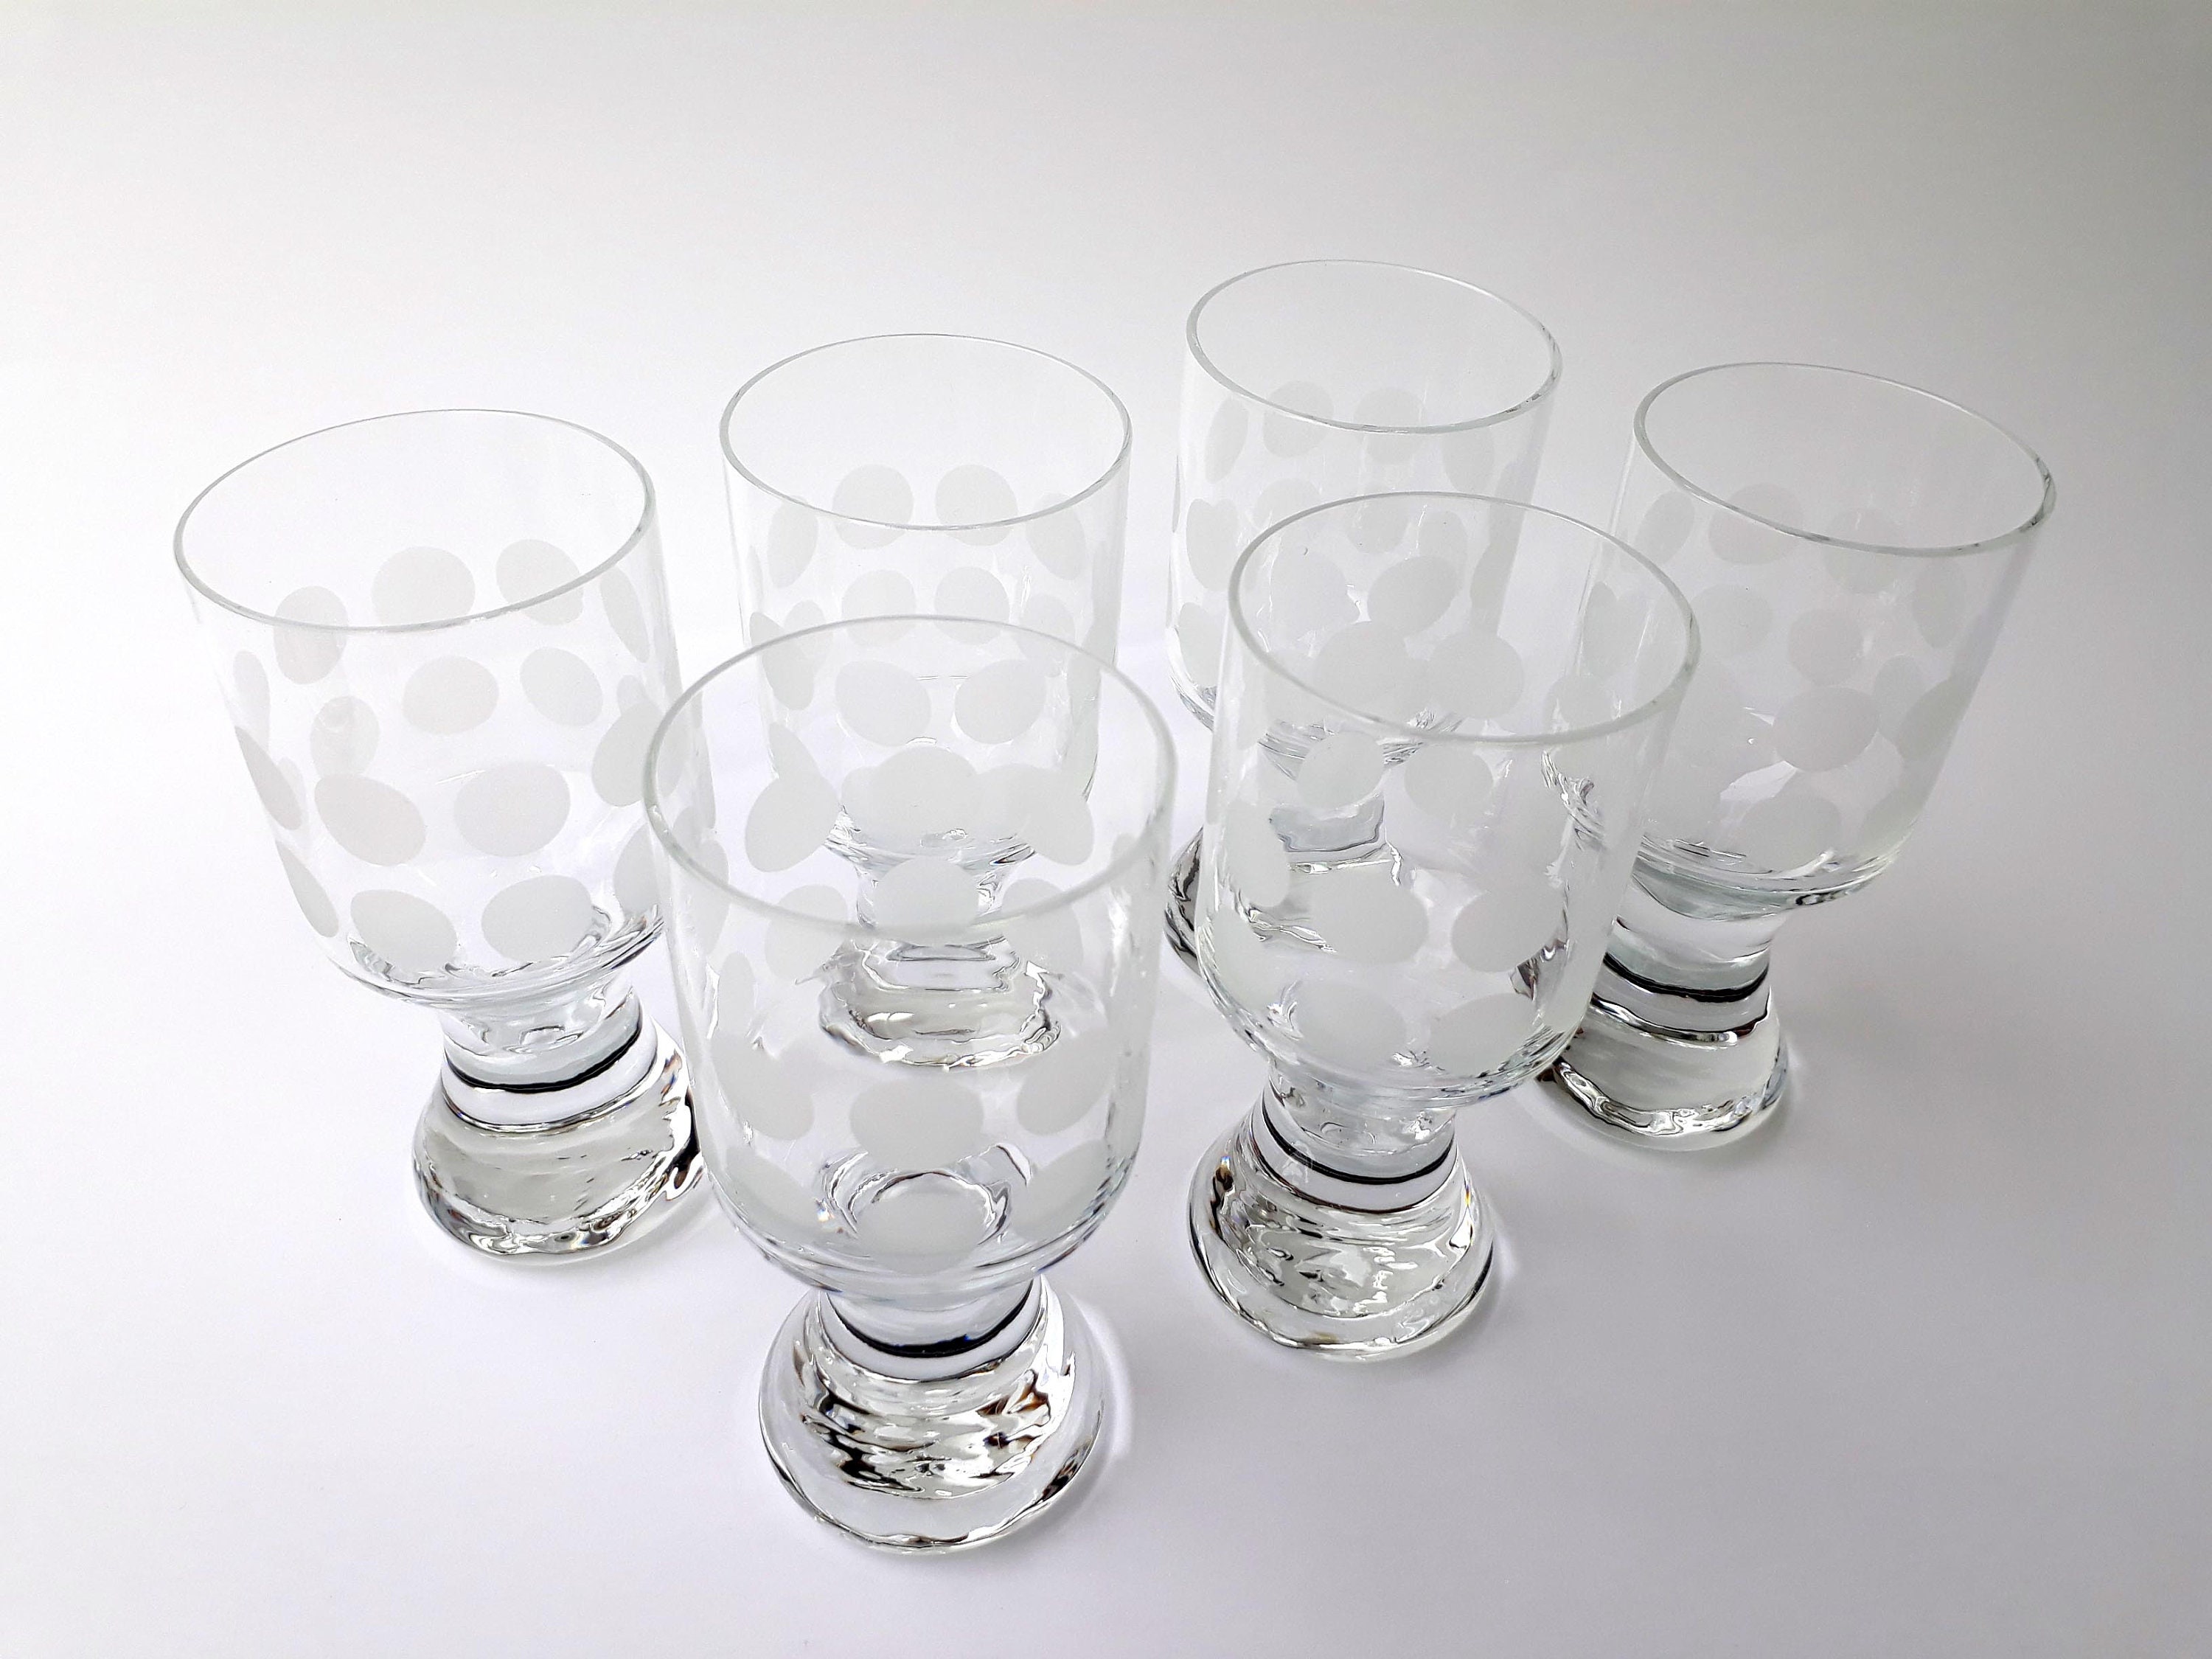 Vintage Glass Drinking Set with Polka Dots from Ingrid Glas - Glashütte  Kurt Wokan, 1970s, Set of 6 for sale at Pamono